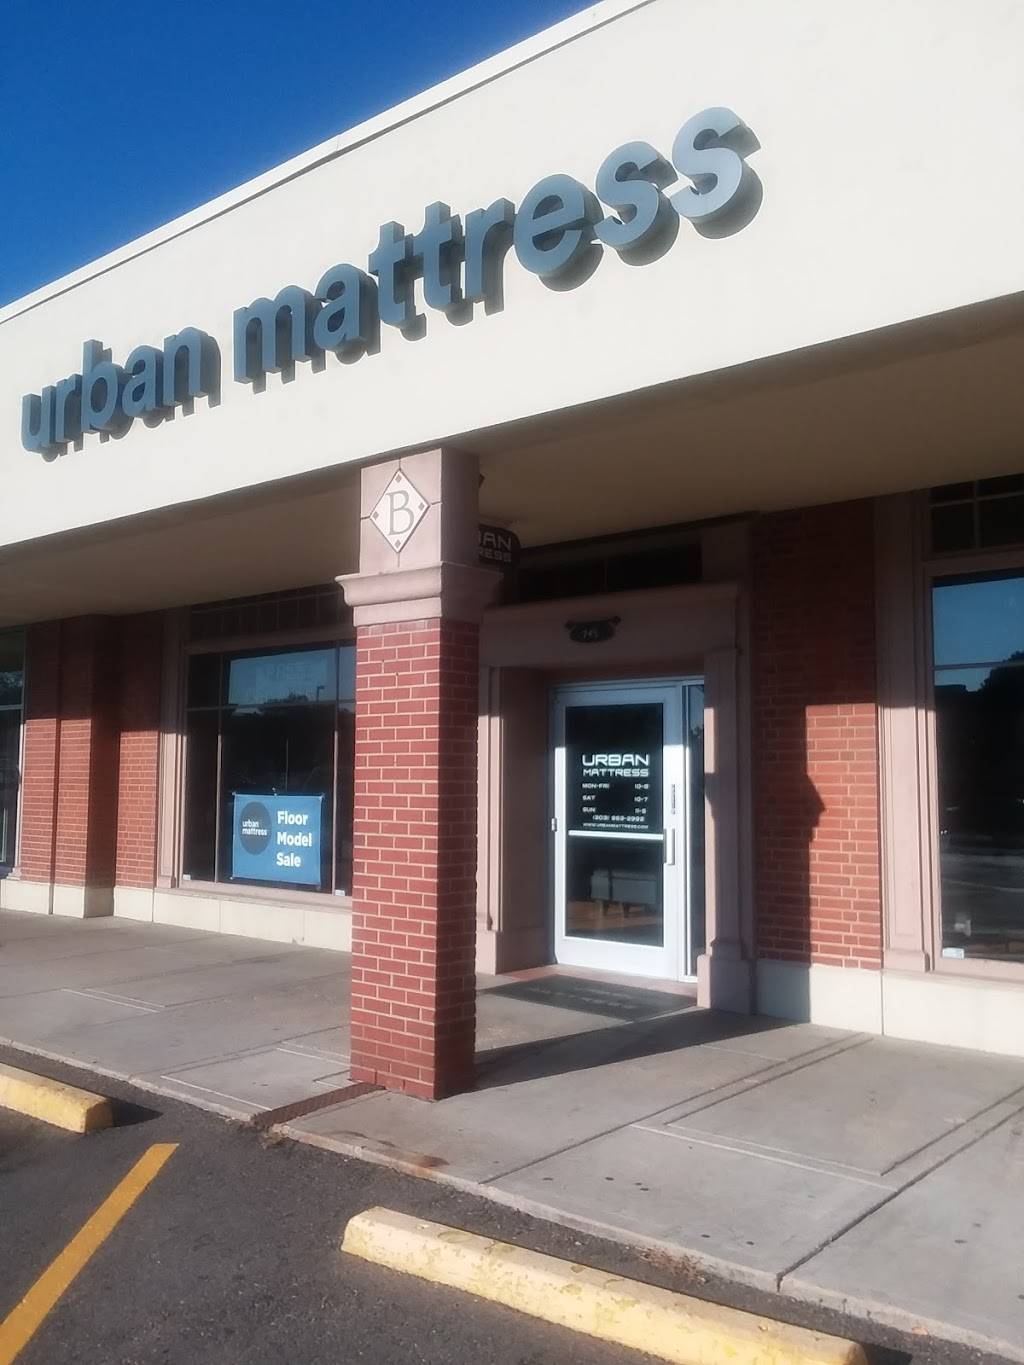 Urban Mattress Denver | 1485 S Colorado Blvd Ste 400, Denver, CO 80222 | Phone: (303) 953-2992